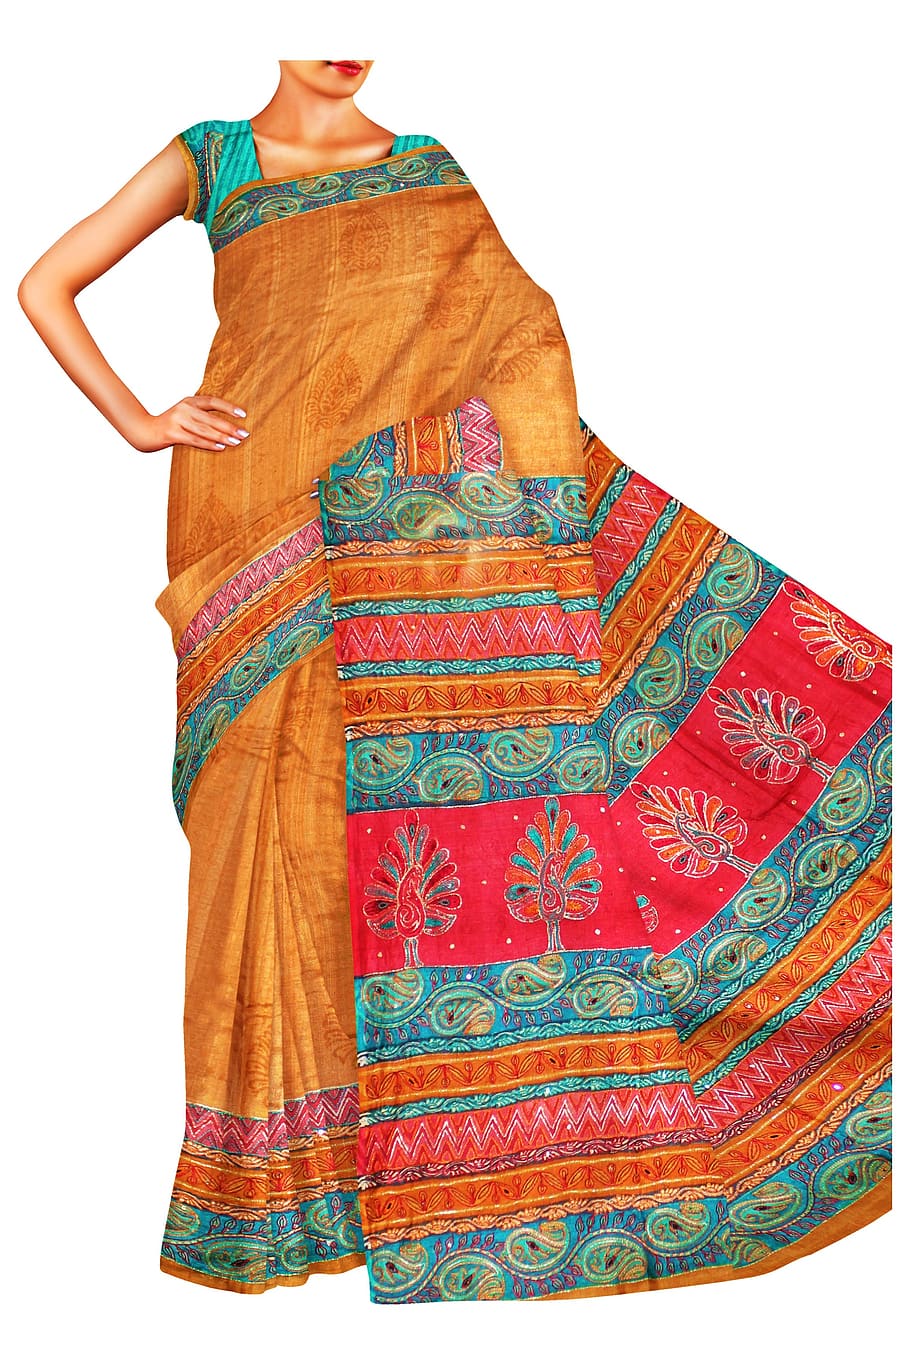 saree, indian, ethnic, clothing, fashion, silk, dress, woman